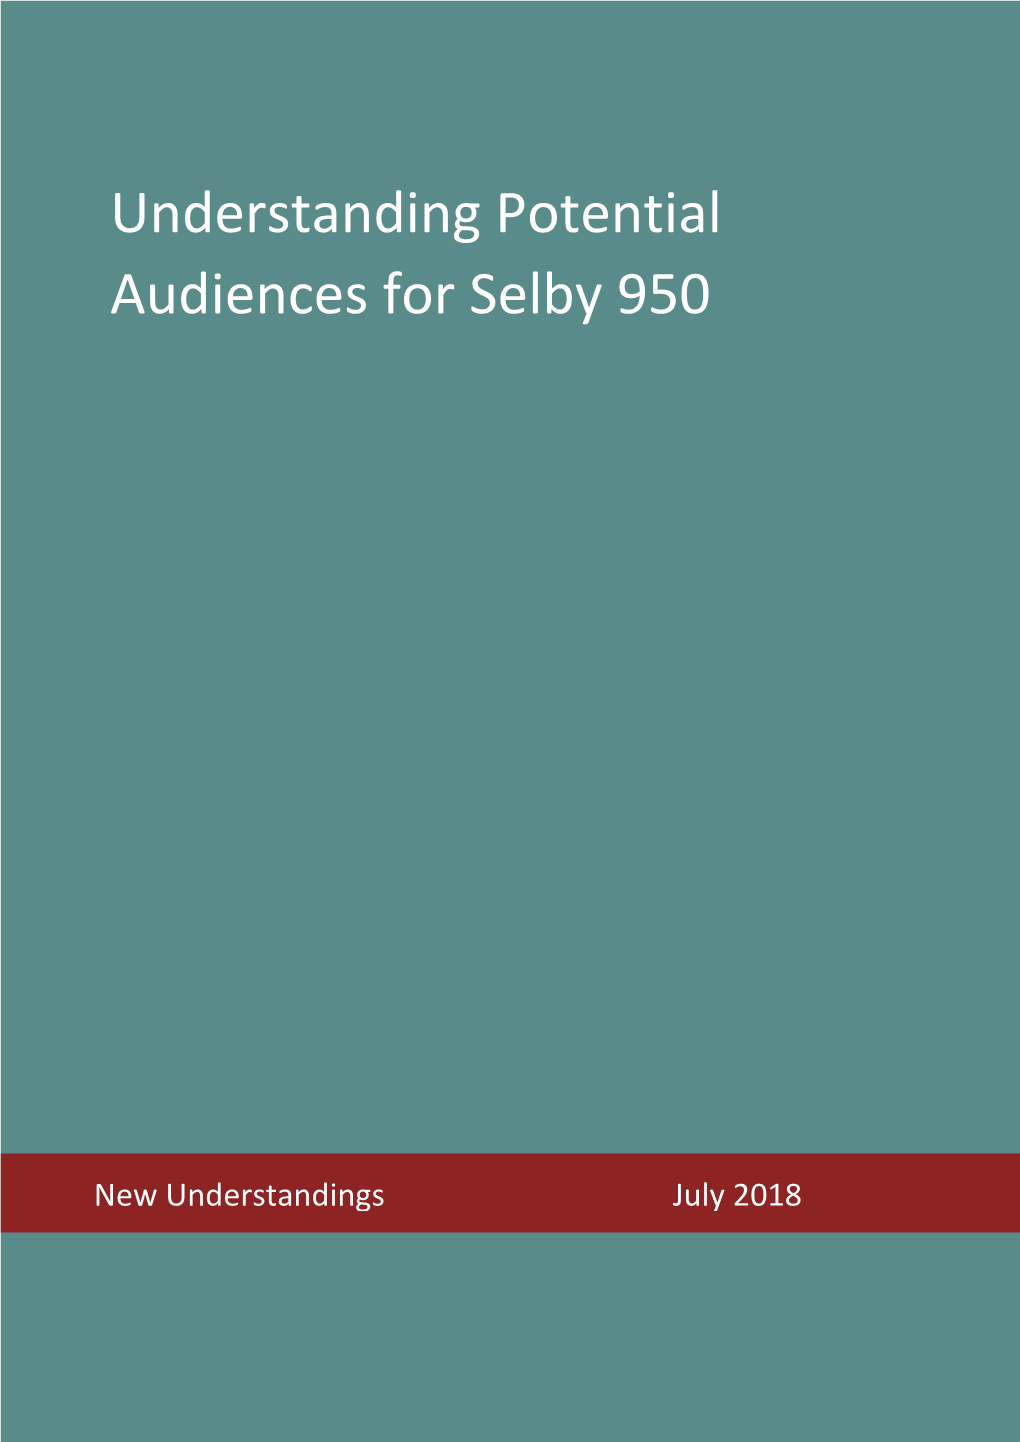 Understanding Potential Audiences for Selby 1 0.3 Methodology 1 0.4 Key Findings 2 0.5 Key Learnings 4 0.6 Next Steps 7